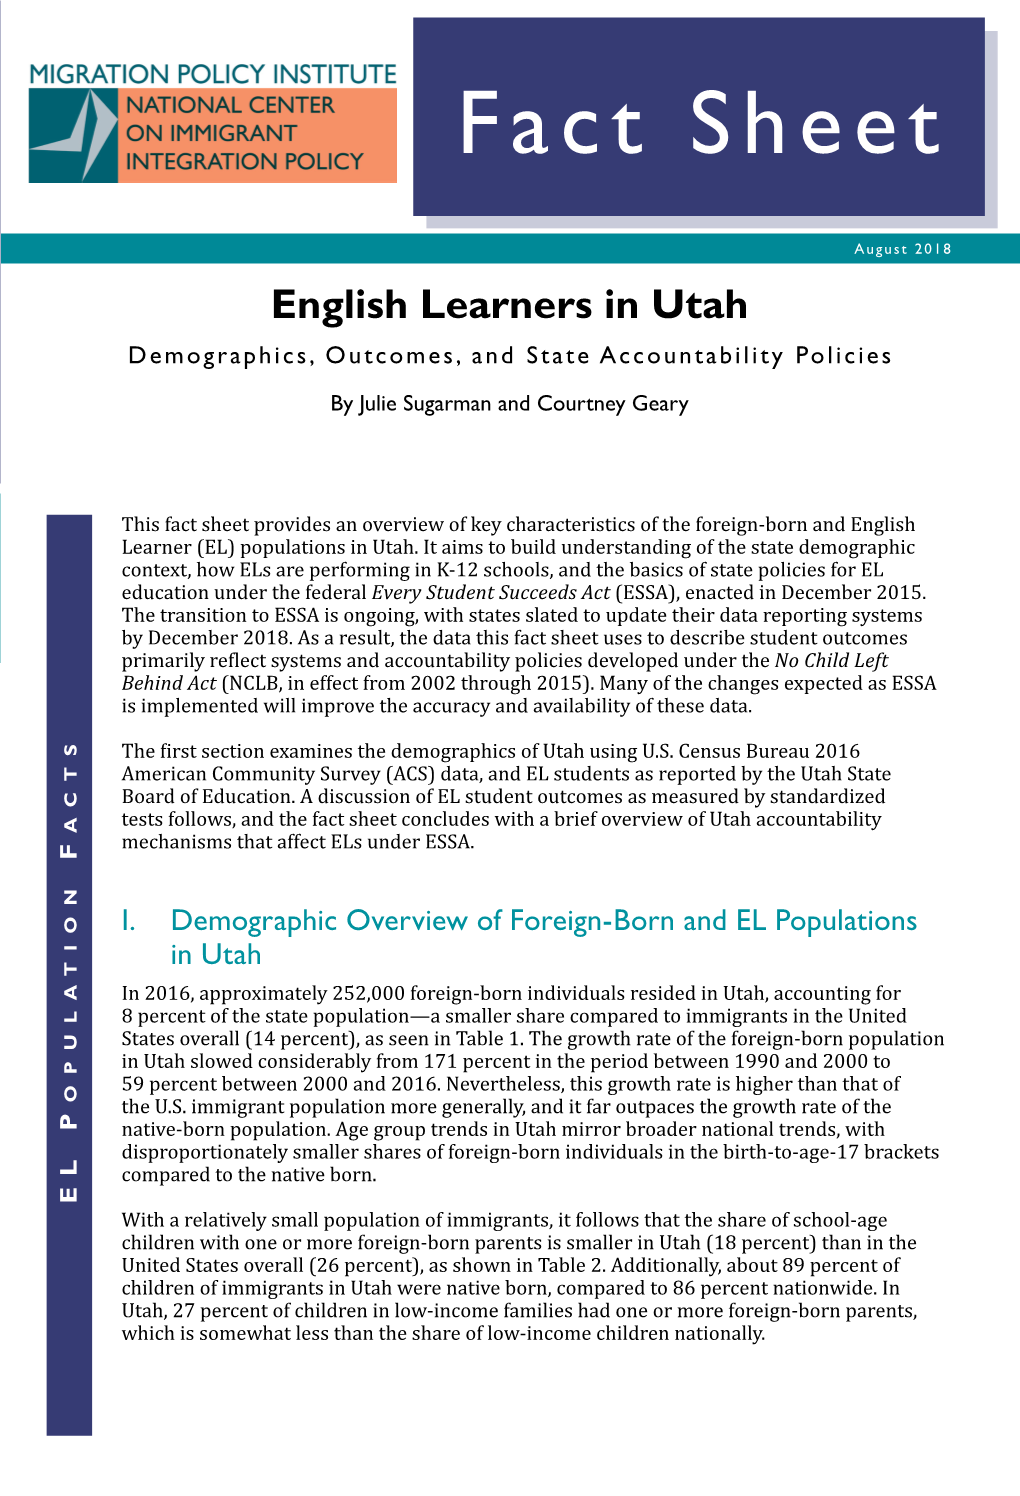 Utah Demographics, Outcomes, and State Accountability Policies